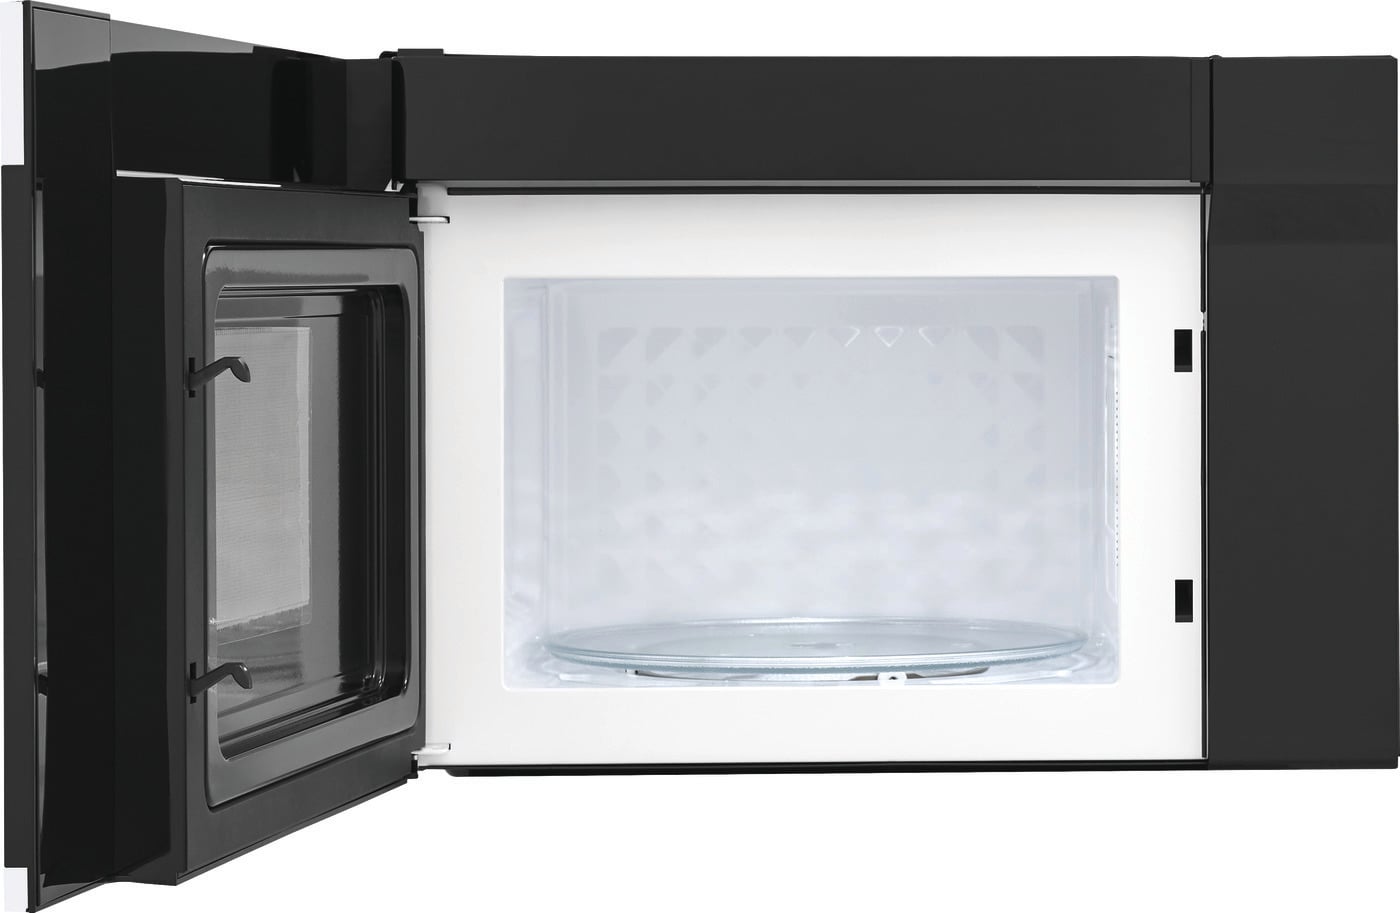 Frigidaire - 1.4 cu. Ft  Over the range Microwave in White (Open Box) - UMV1422UW